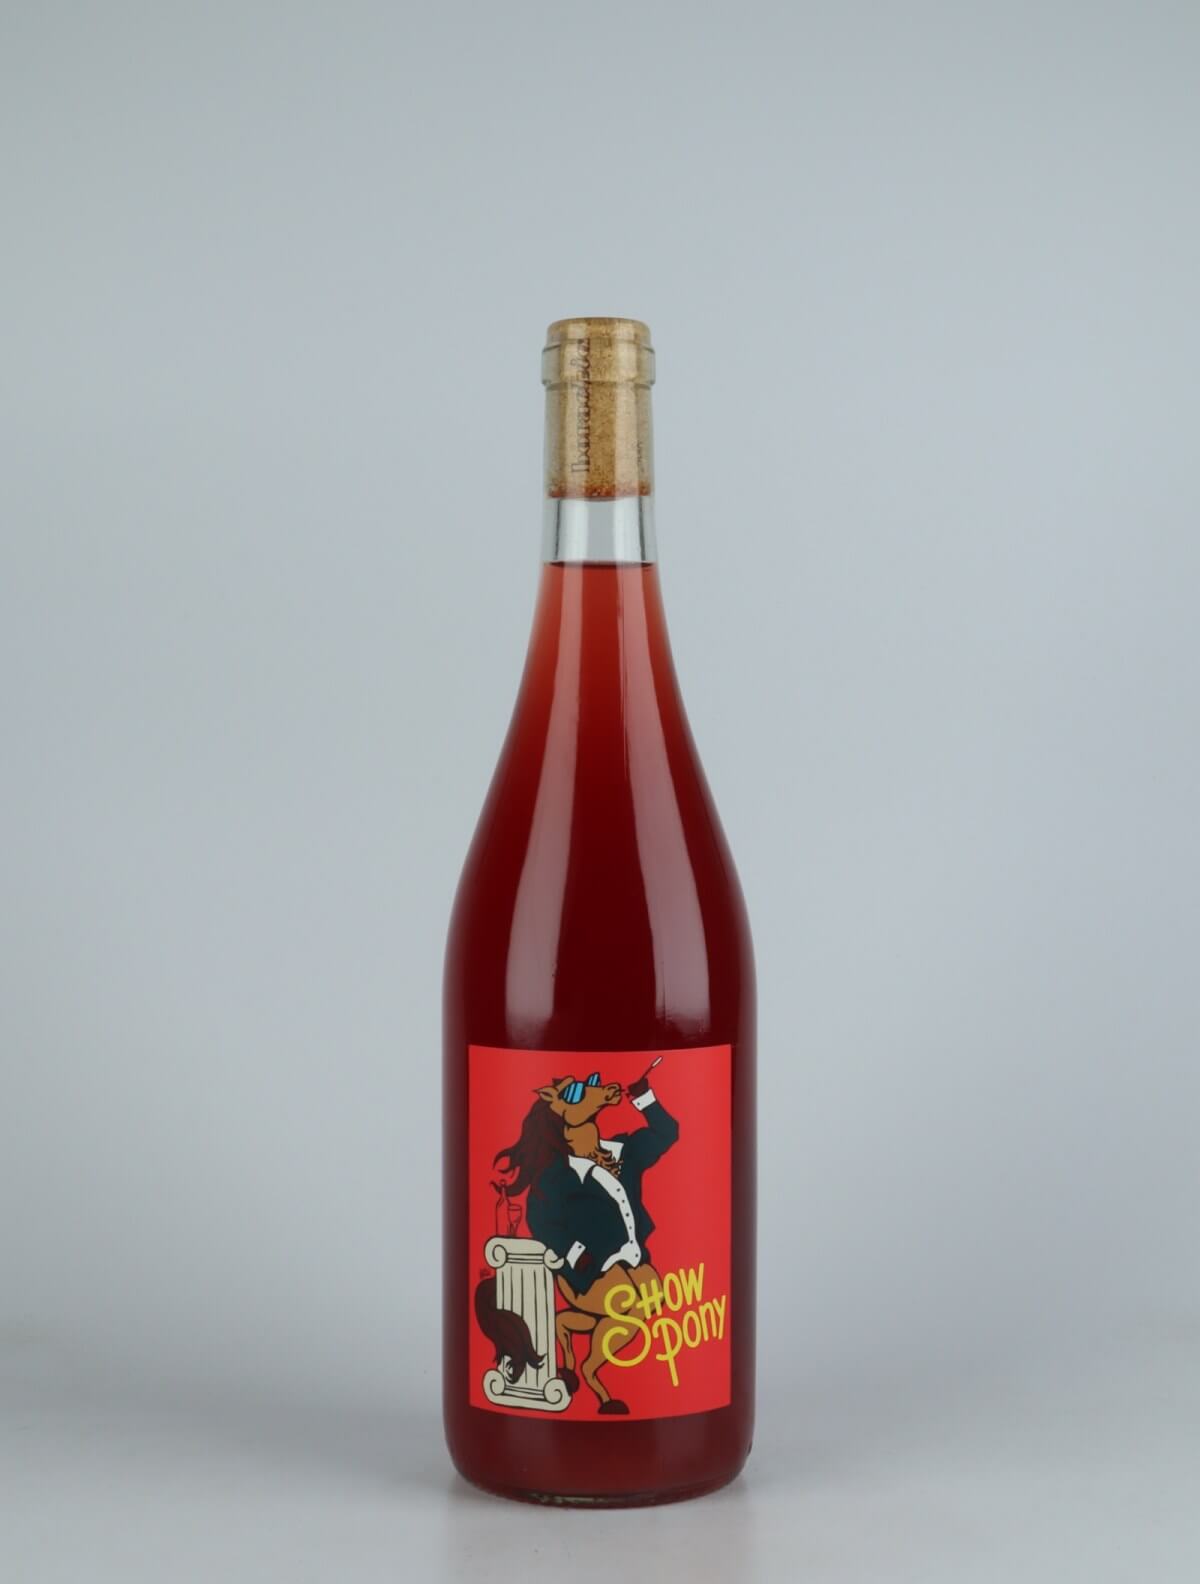 A bottle N.V. Show Pony Rosé from Borachio, Adelaide Hills in Australia